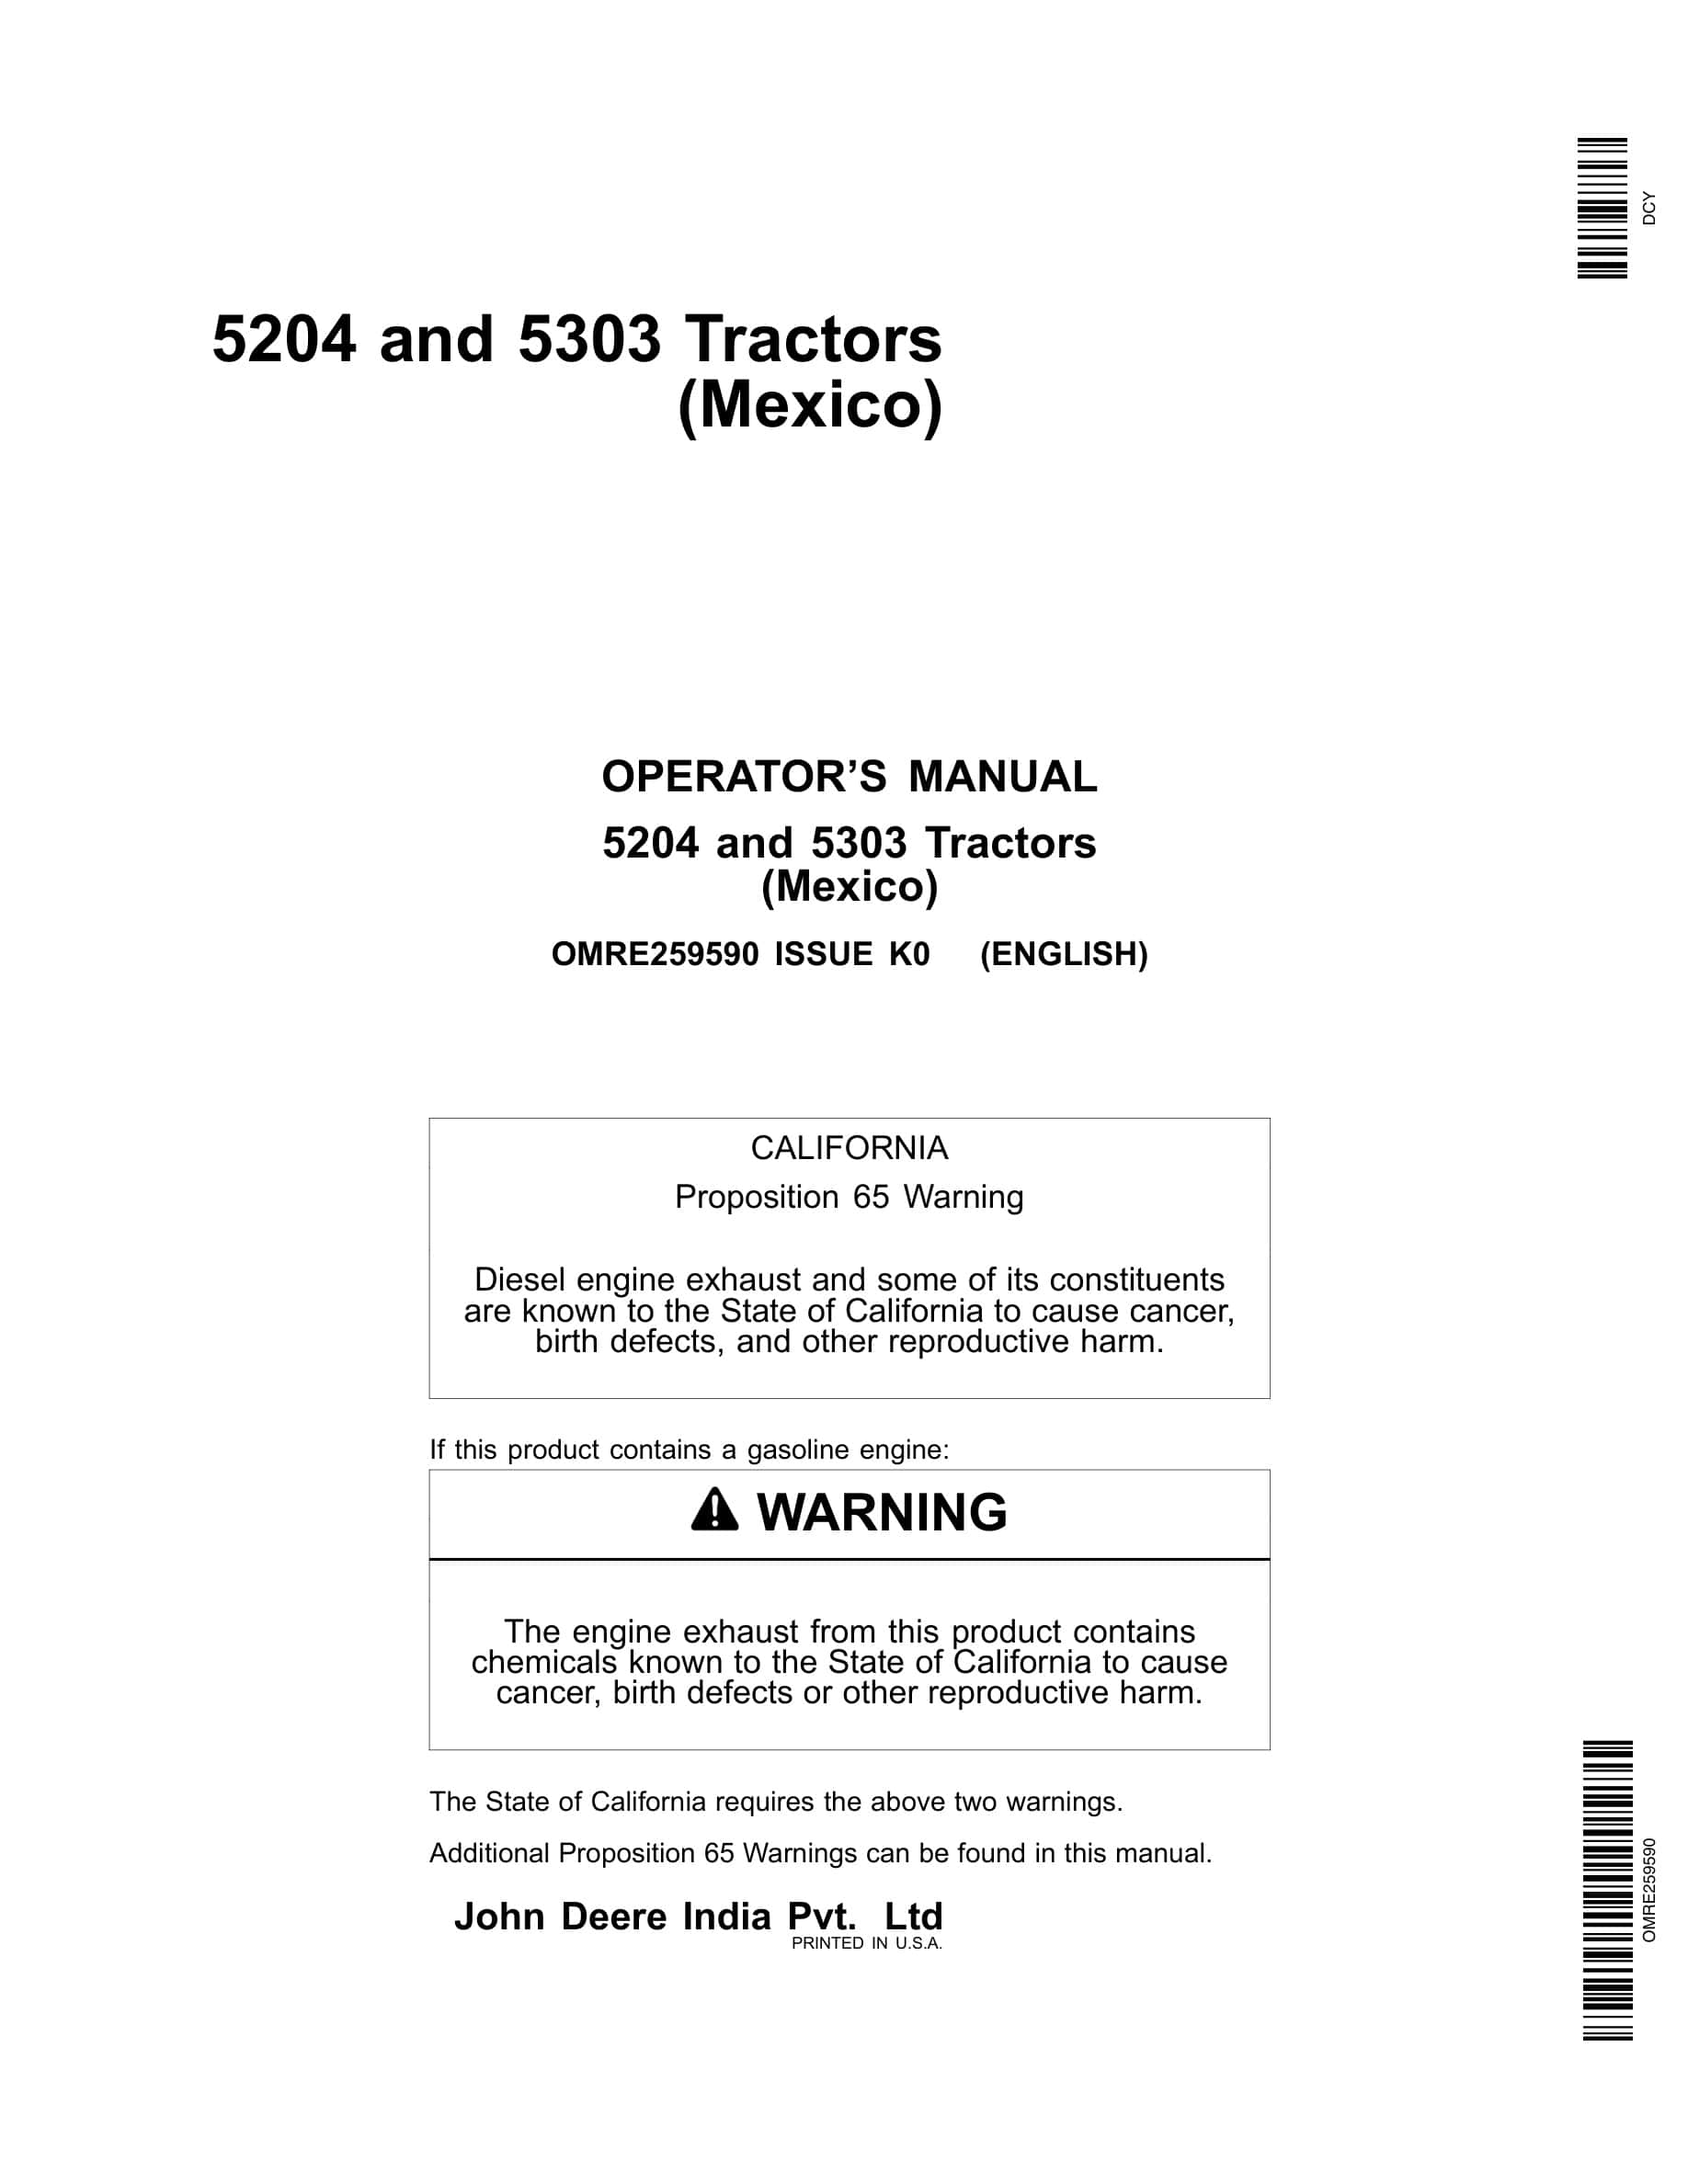 John Deere 5204 And 5303 Tractors Operator Manuals OMRE259590-1